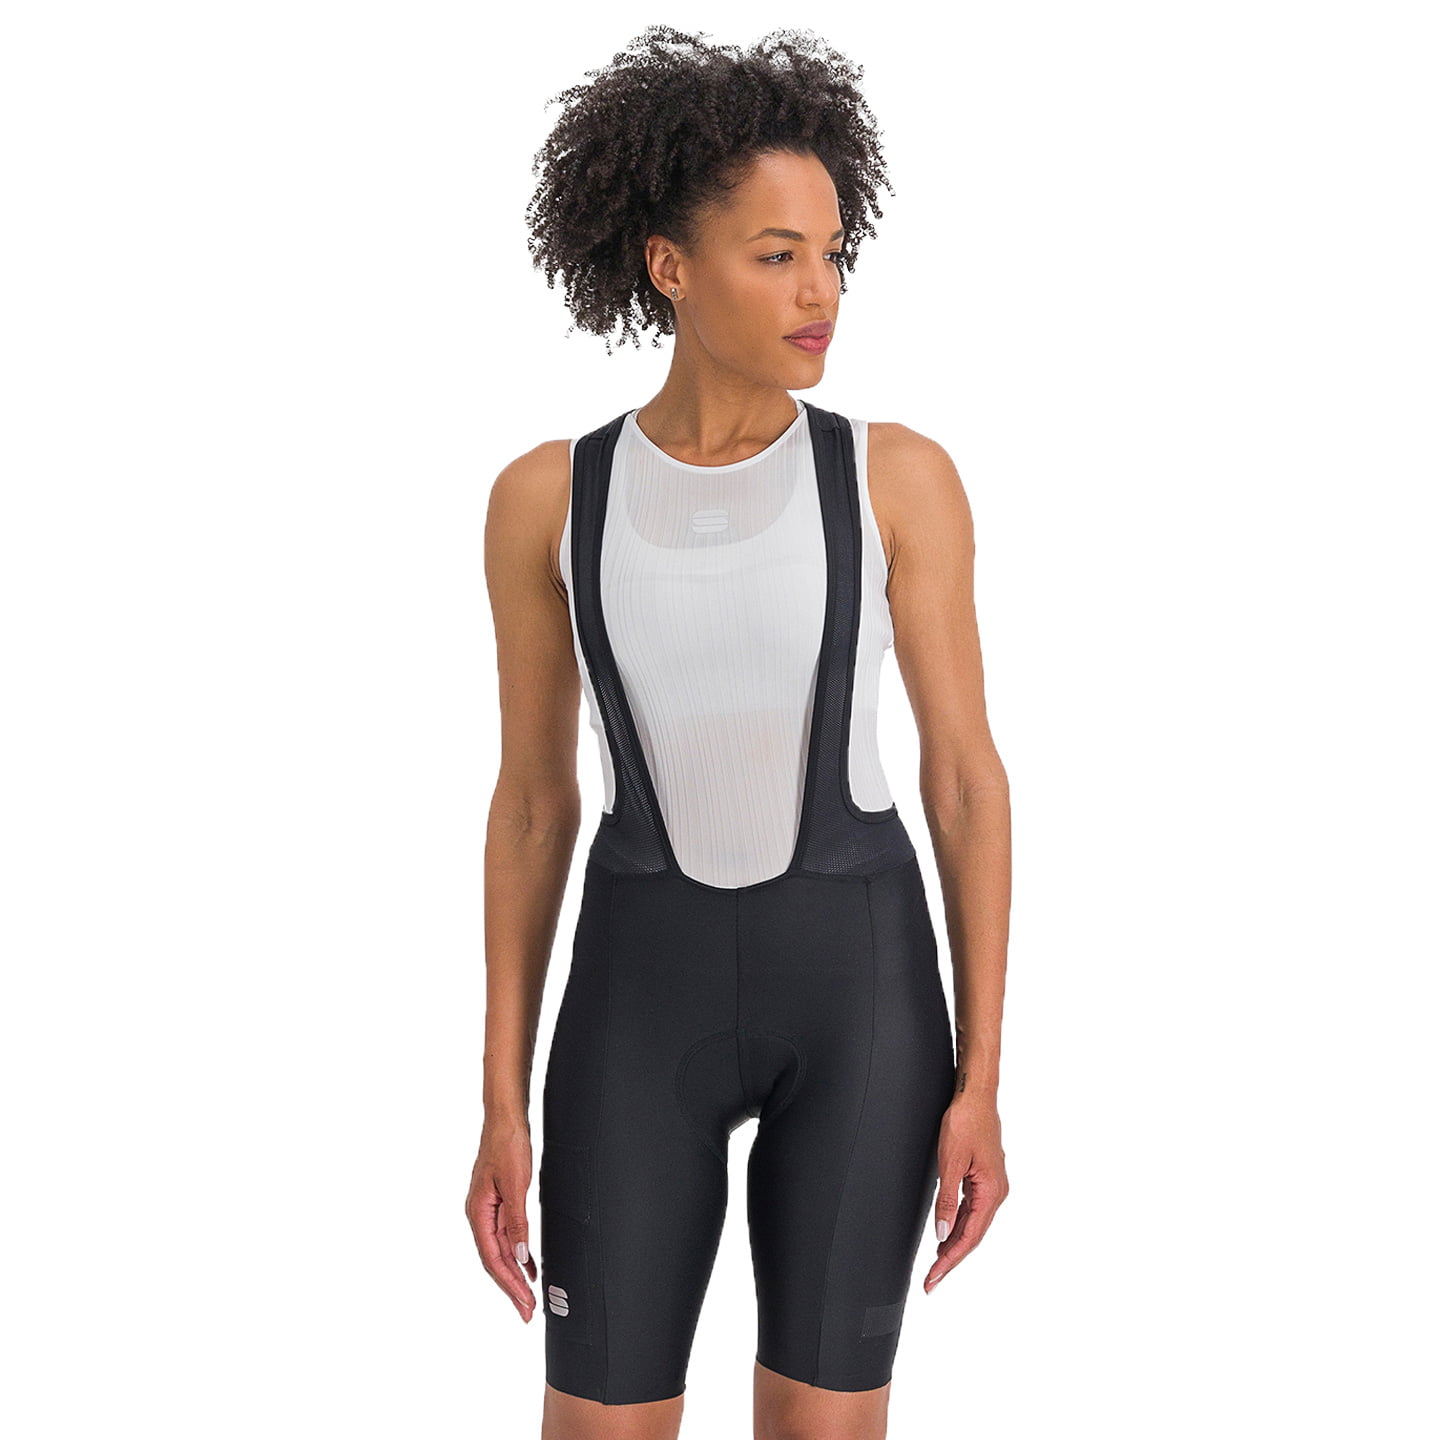 Women’s Bib Shorts, size XL, Cycle trousers, Cycle gear